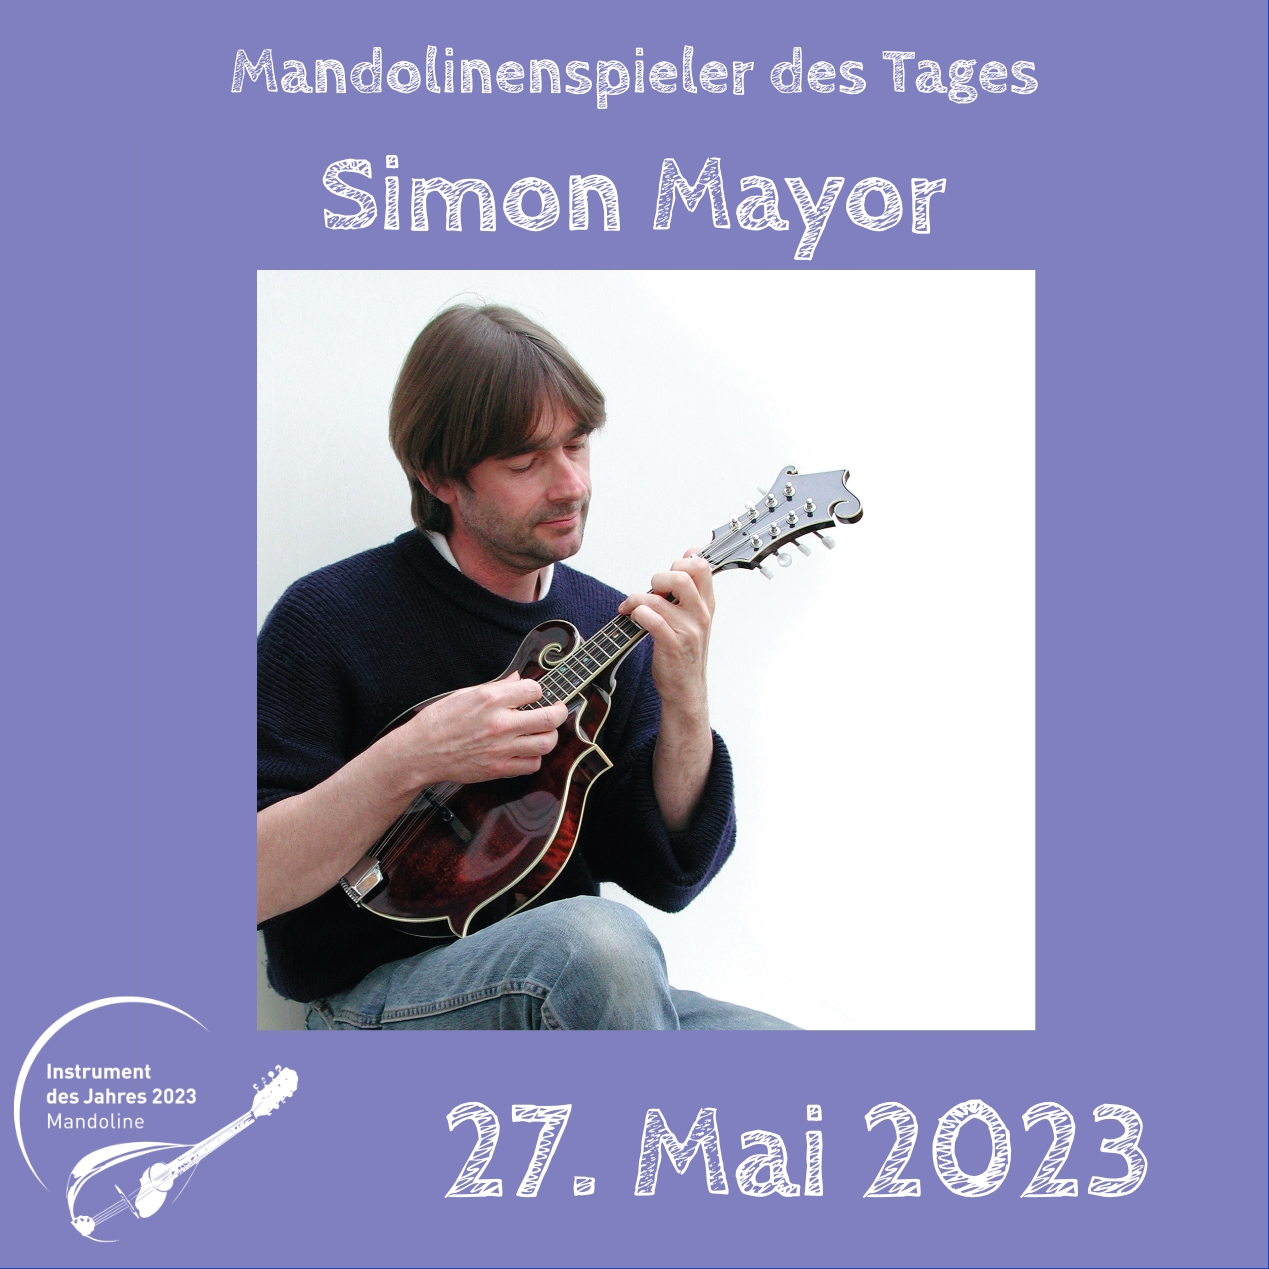 Simon Mayor Mandoline Instrument des Jahres 2023 Mandolinenspieler Mandolinenspielerin des Tages